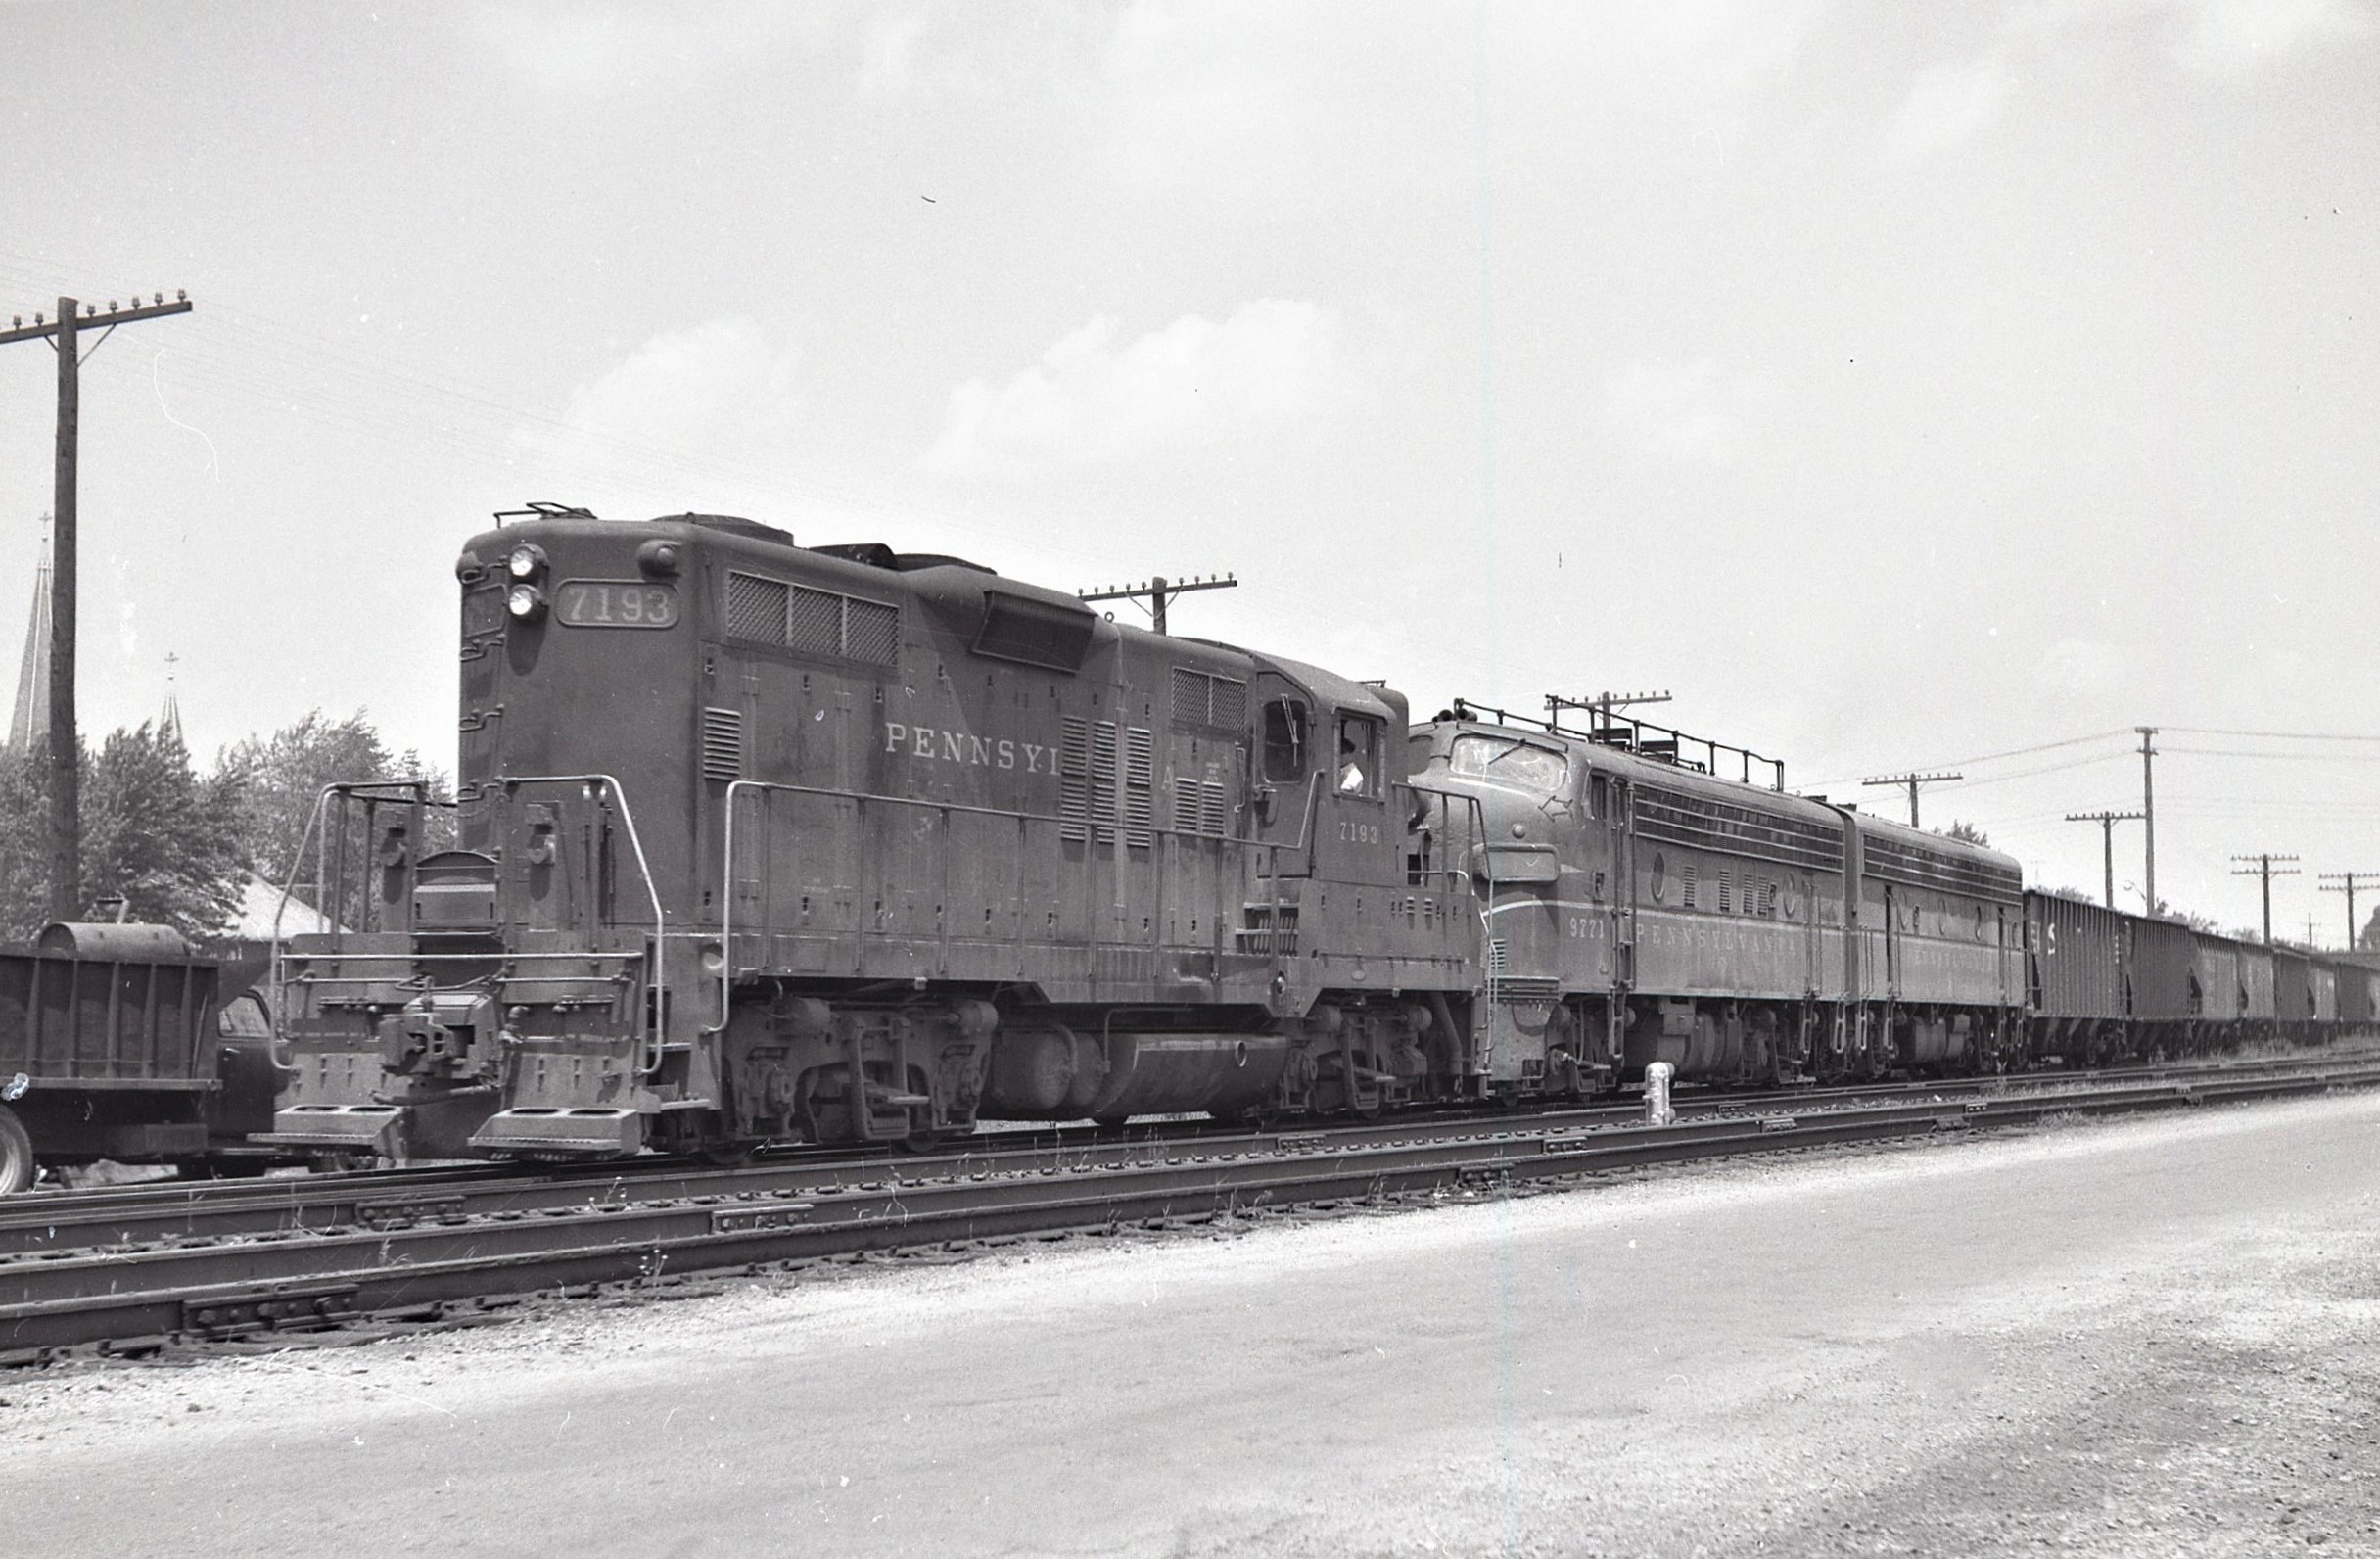 Pennsylvania Railroad | Altoona, Pennsylvania | GP9 7193 | F7a 9770 | F7b | Coal Train |1960 | Elmer Kremkow Photo